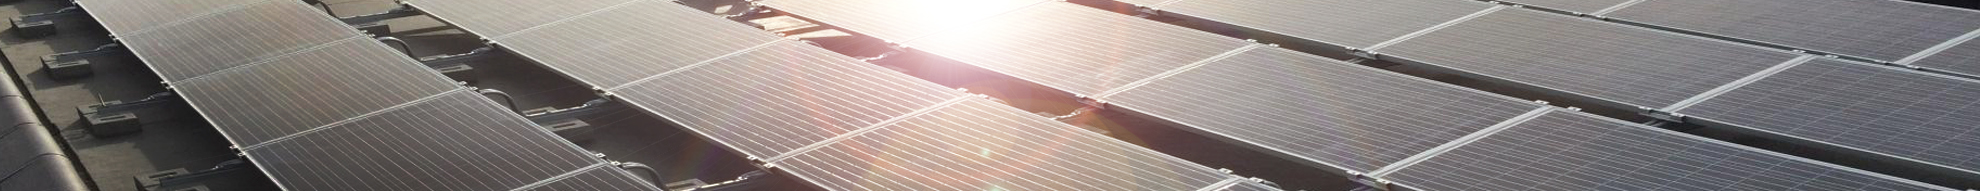 Solar PV system repair & maintenance